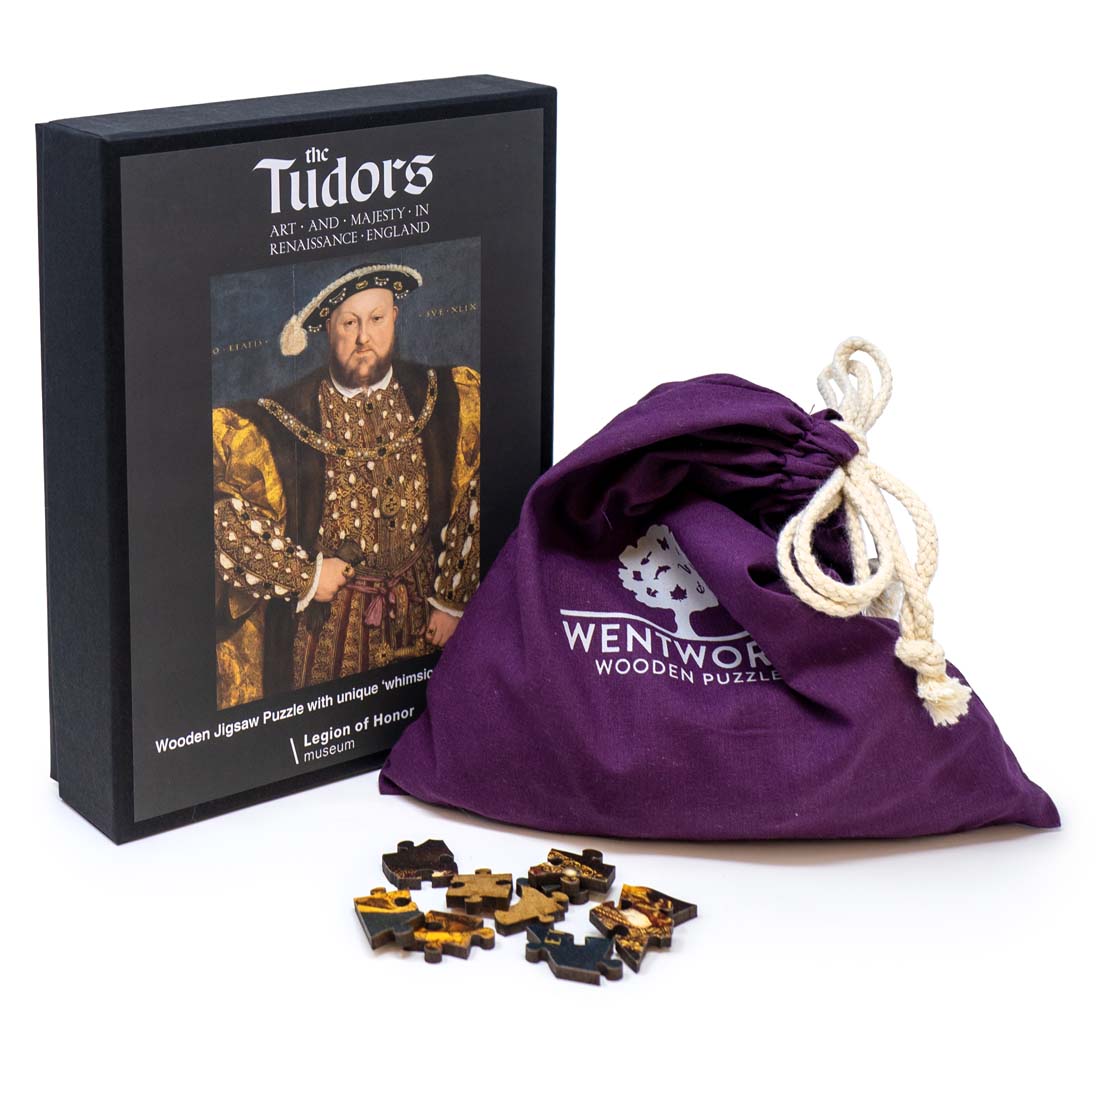 The Tudors Portrait of Henry VIII 250-Piece Wooden Puzzle